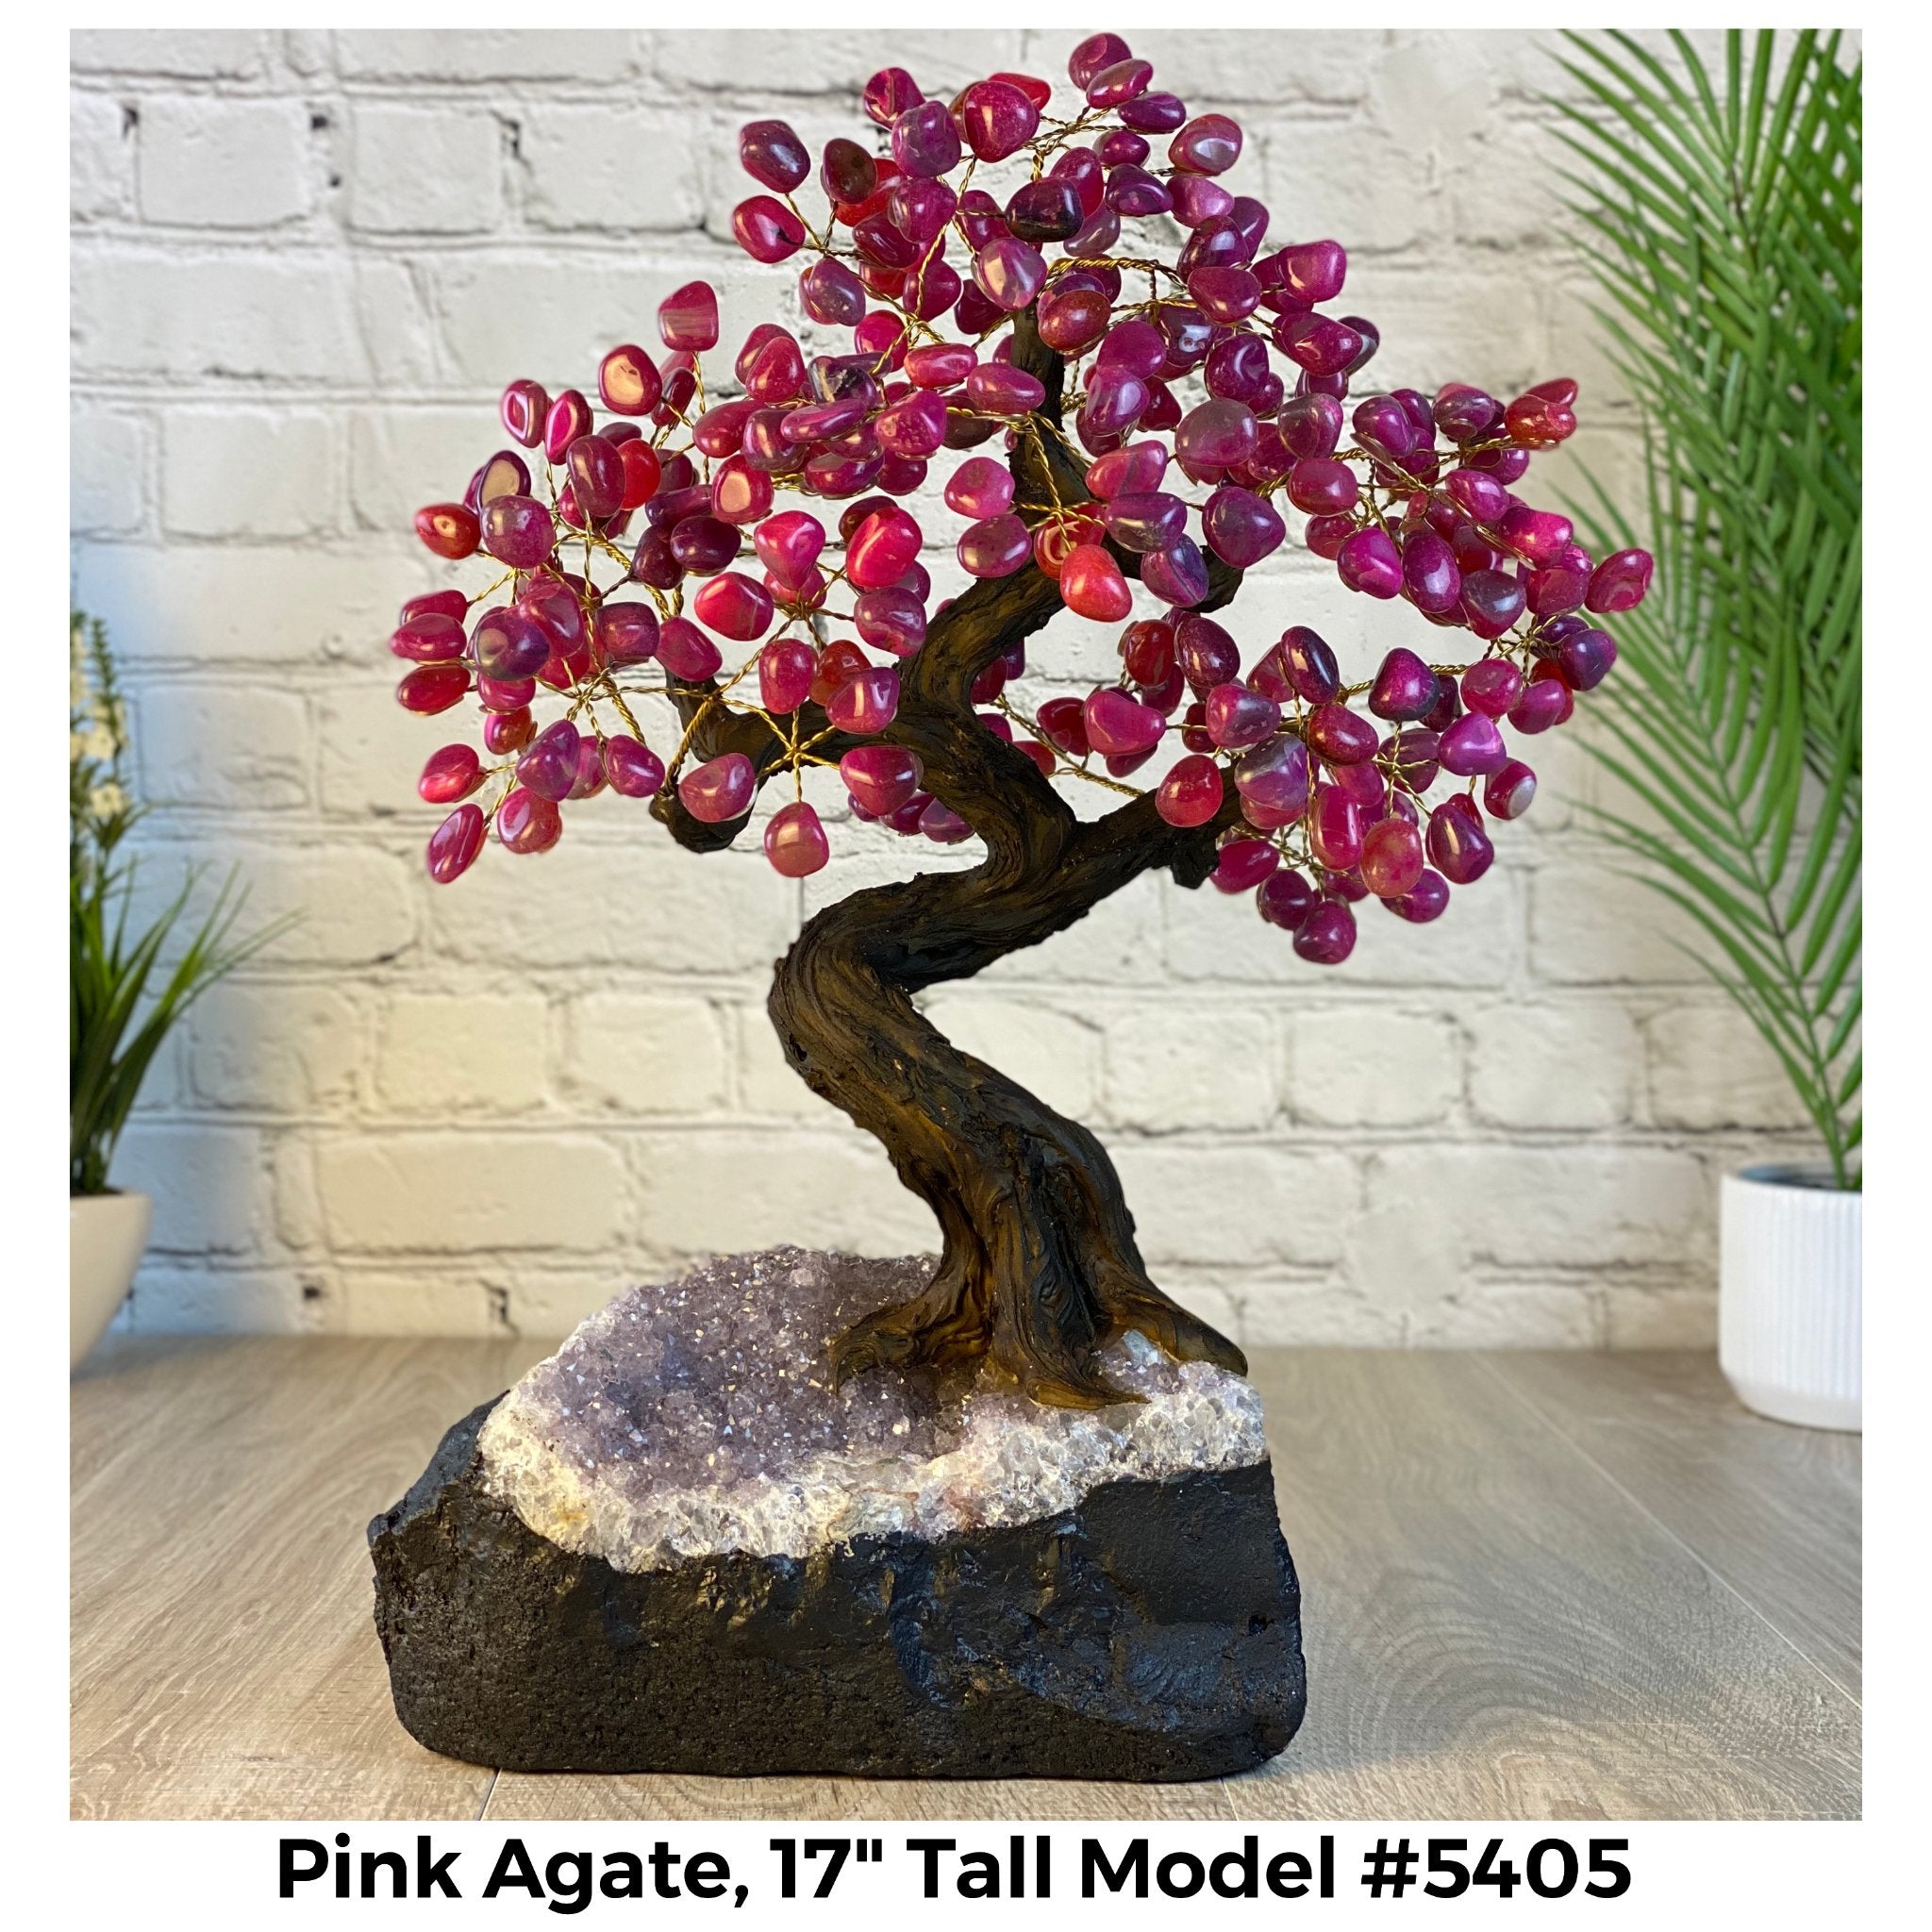 Pink Agate 17" Tall Handmade Gemstone Tree on a Crystal base, 240 Gems #5405PNKA - Brazil GemsBrazil GemsPink Agate 17" Tall Handmade Gemstone Tree on a Crystal base, 240 Gems #5405PNKAGemstone Trees5405PNKA